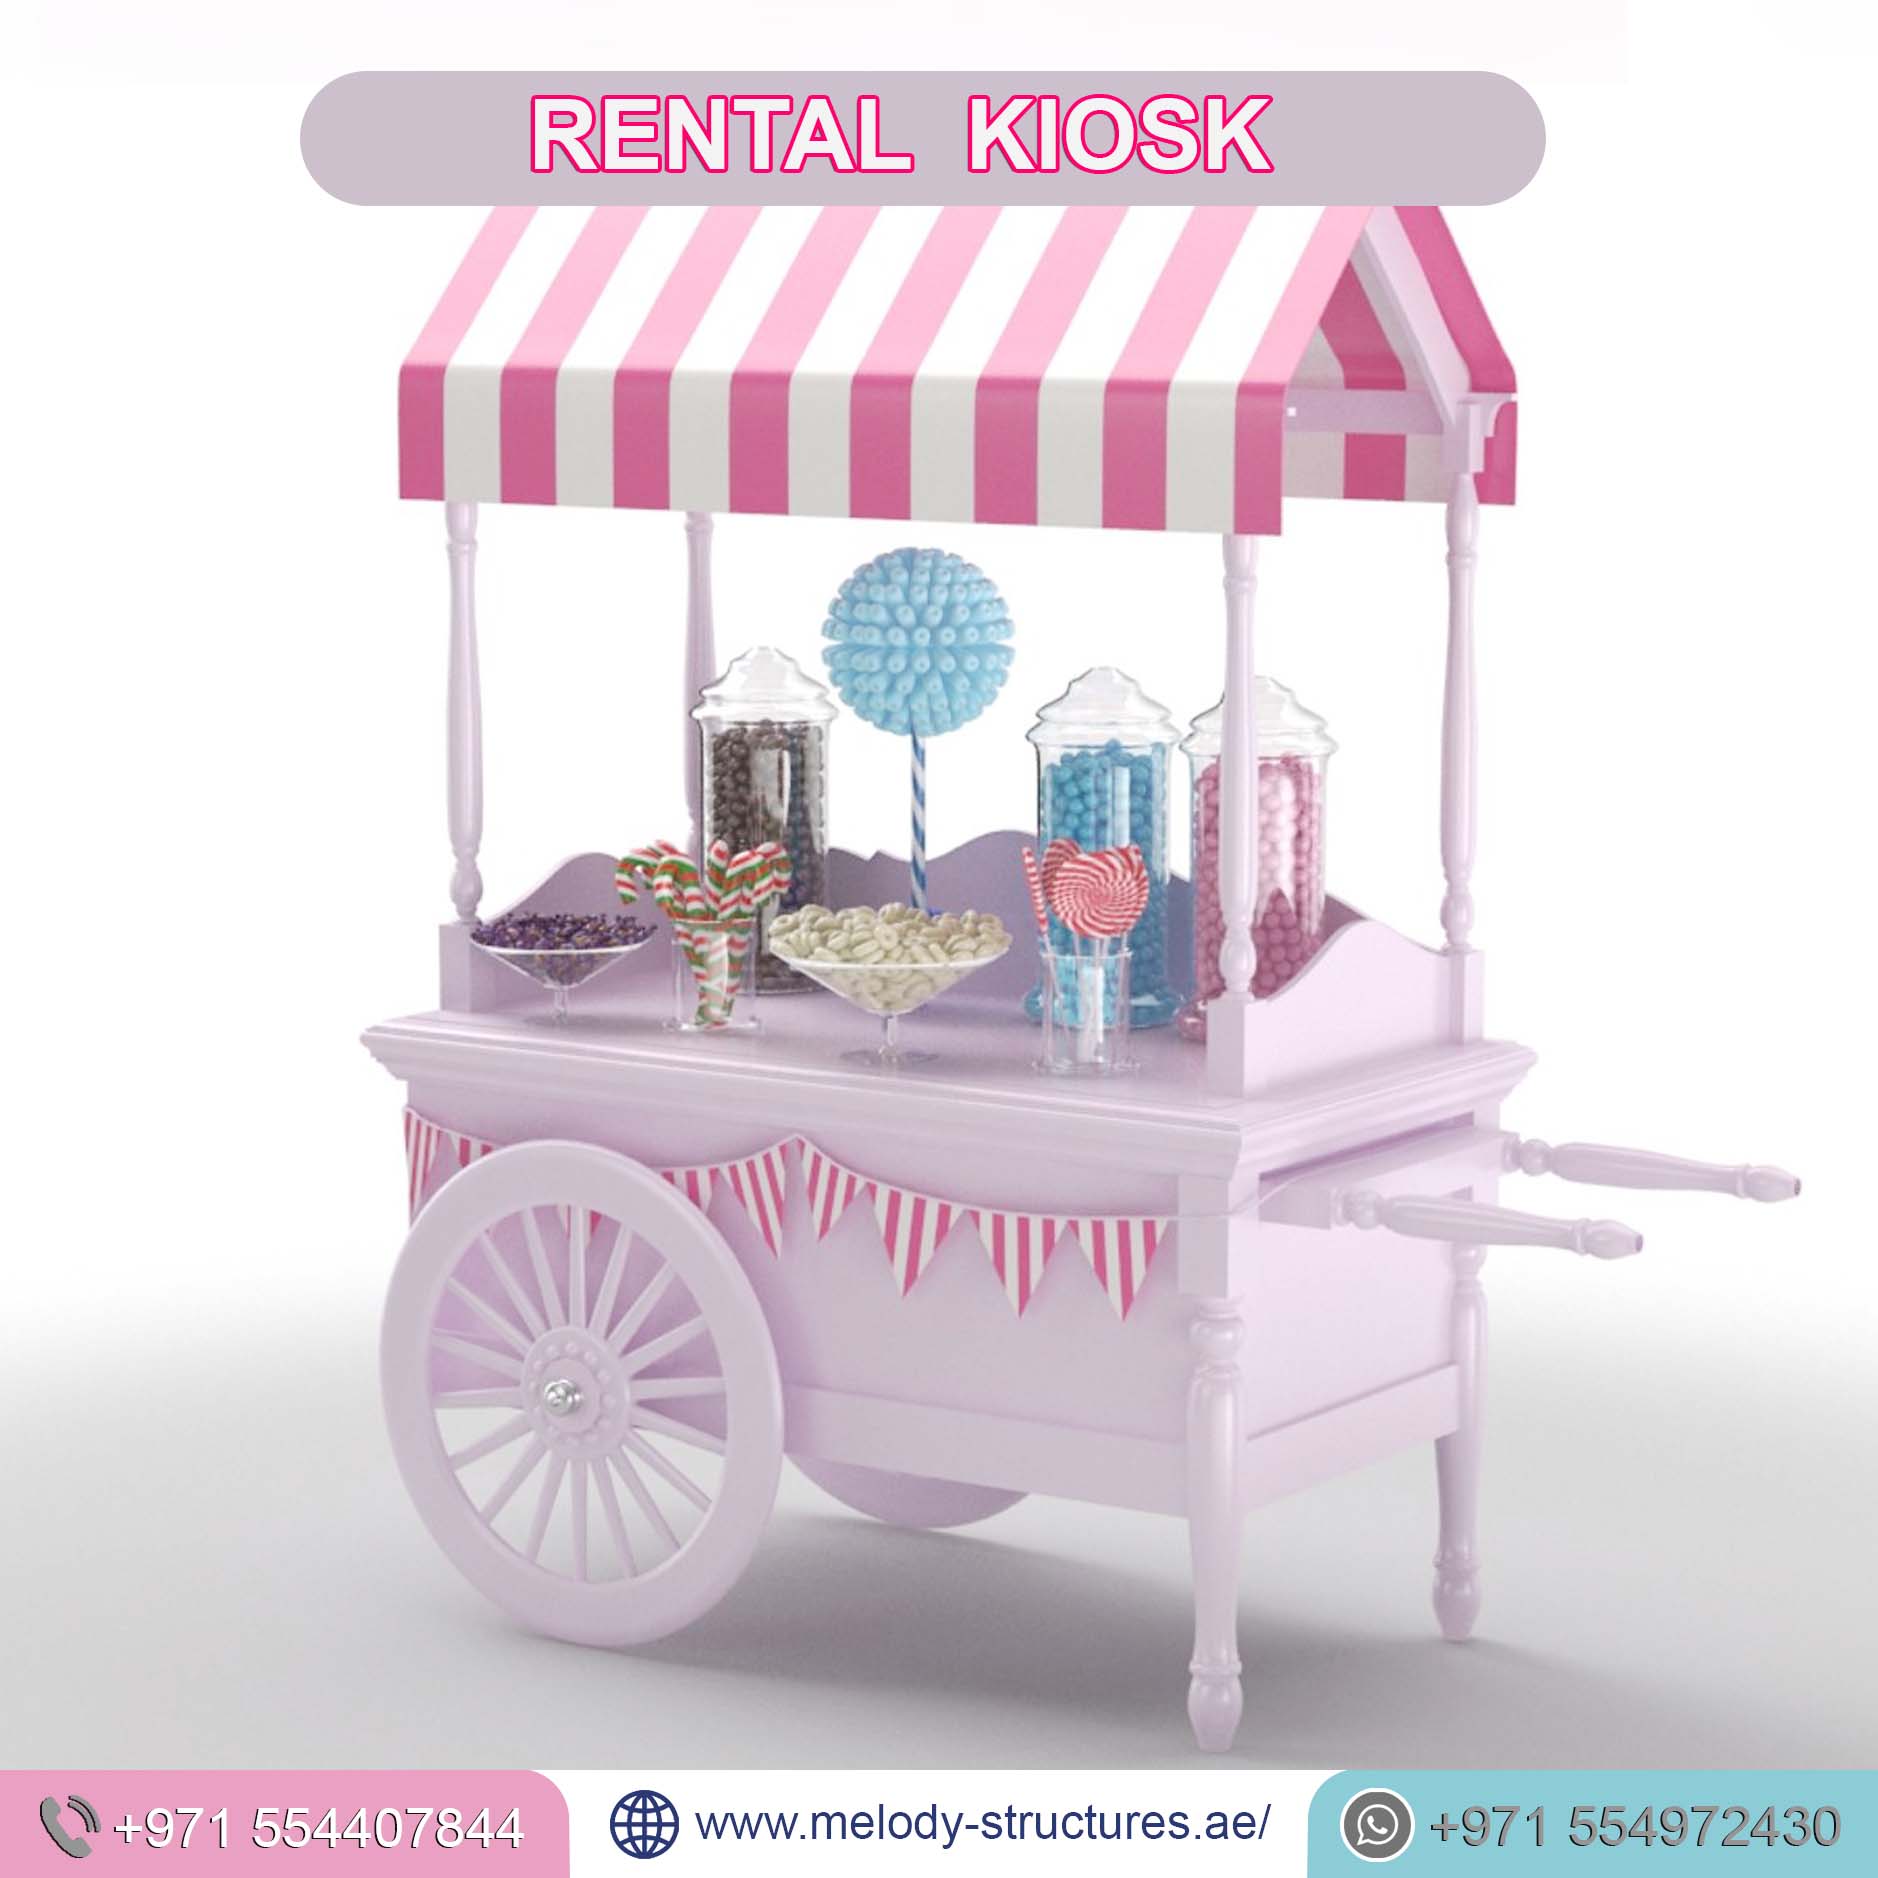 Short Term Rental Kiosk in UAE | Ready To Use | Best Deal